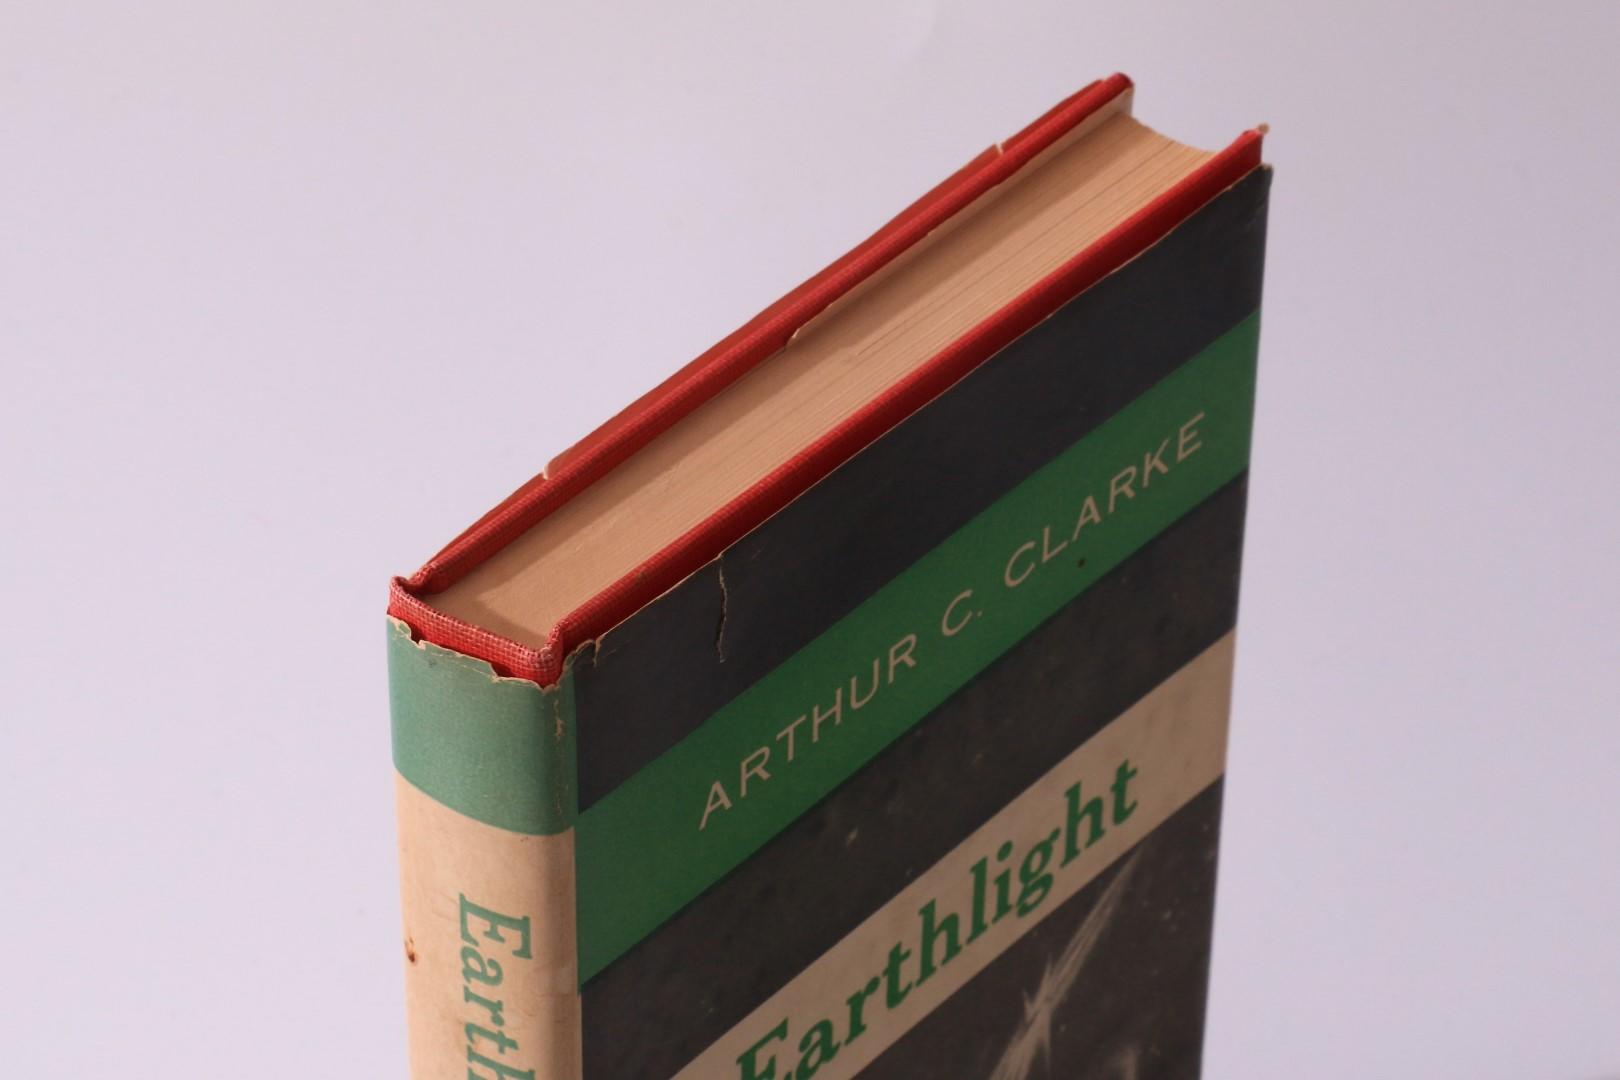 Arthur C. Clarke - Earthlight - Ballantine Books, 1955, First Edition.